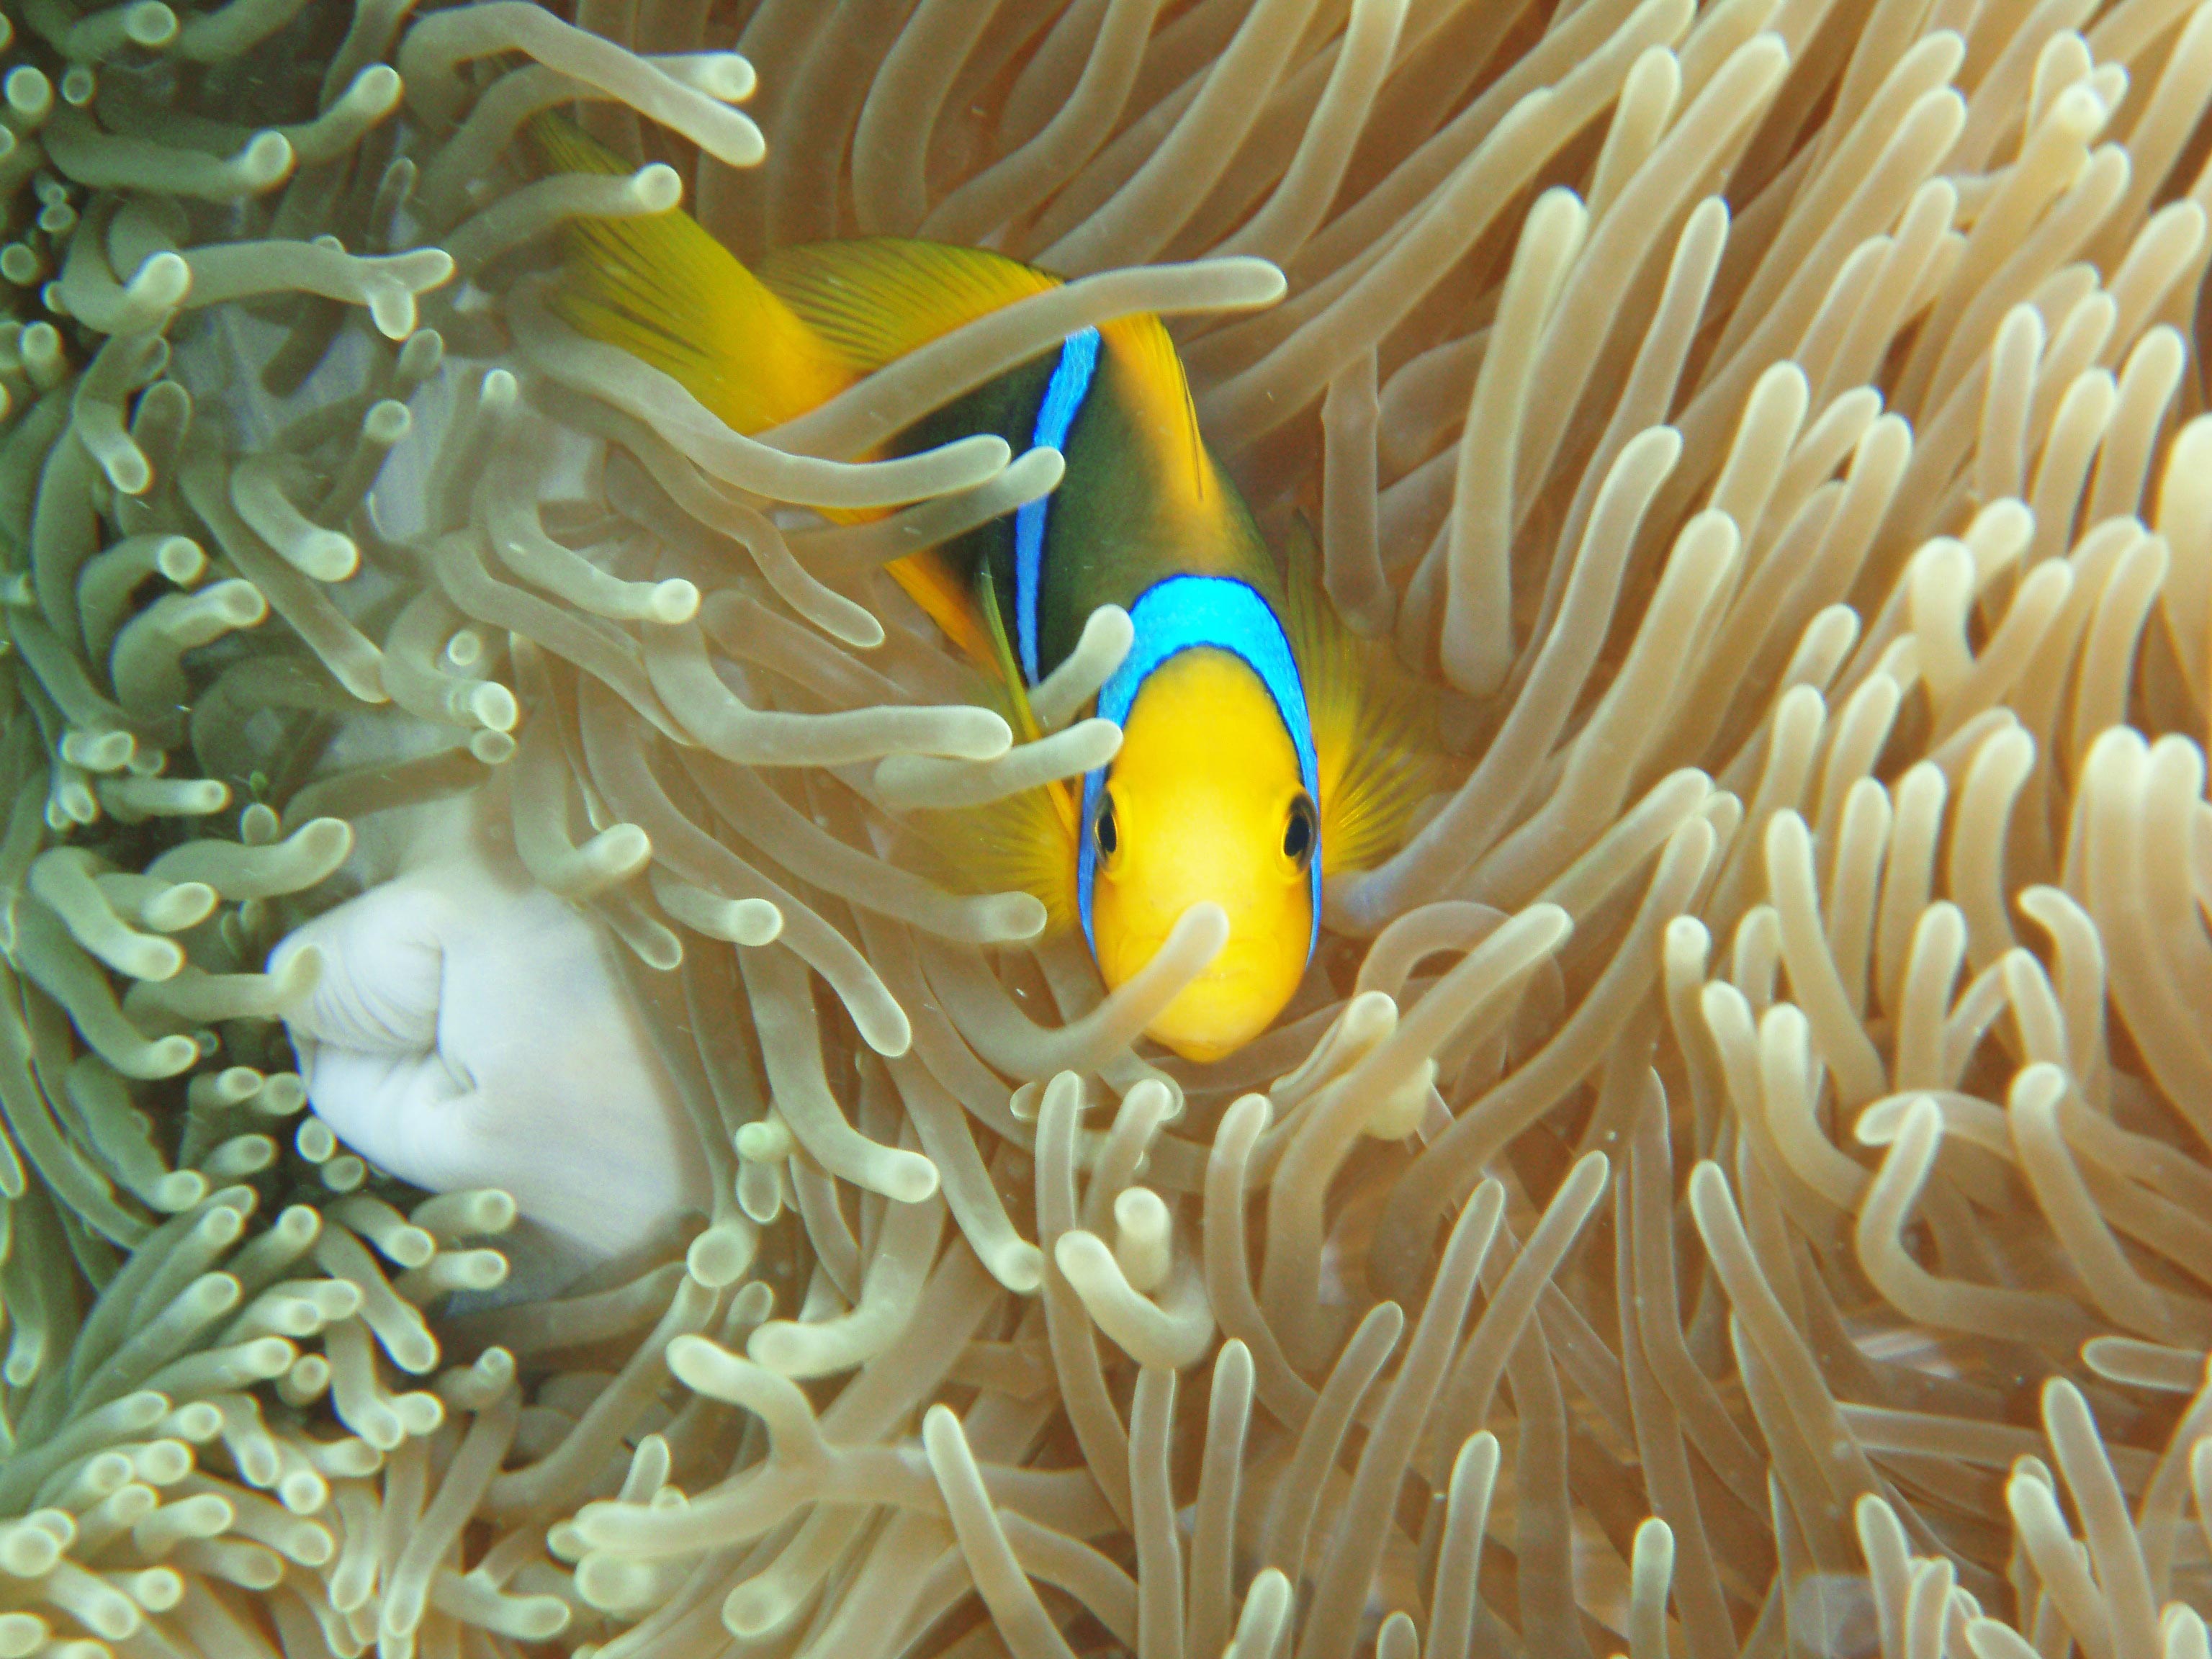 Orange-fin anemonefish